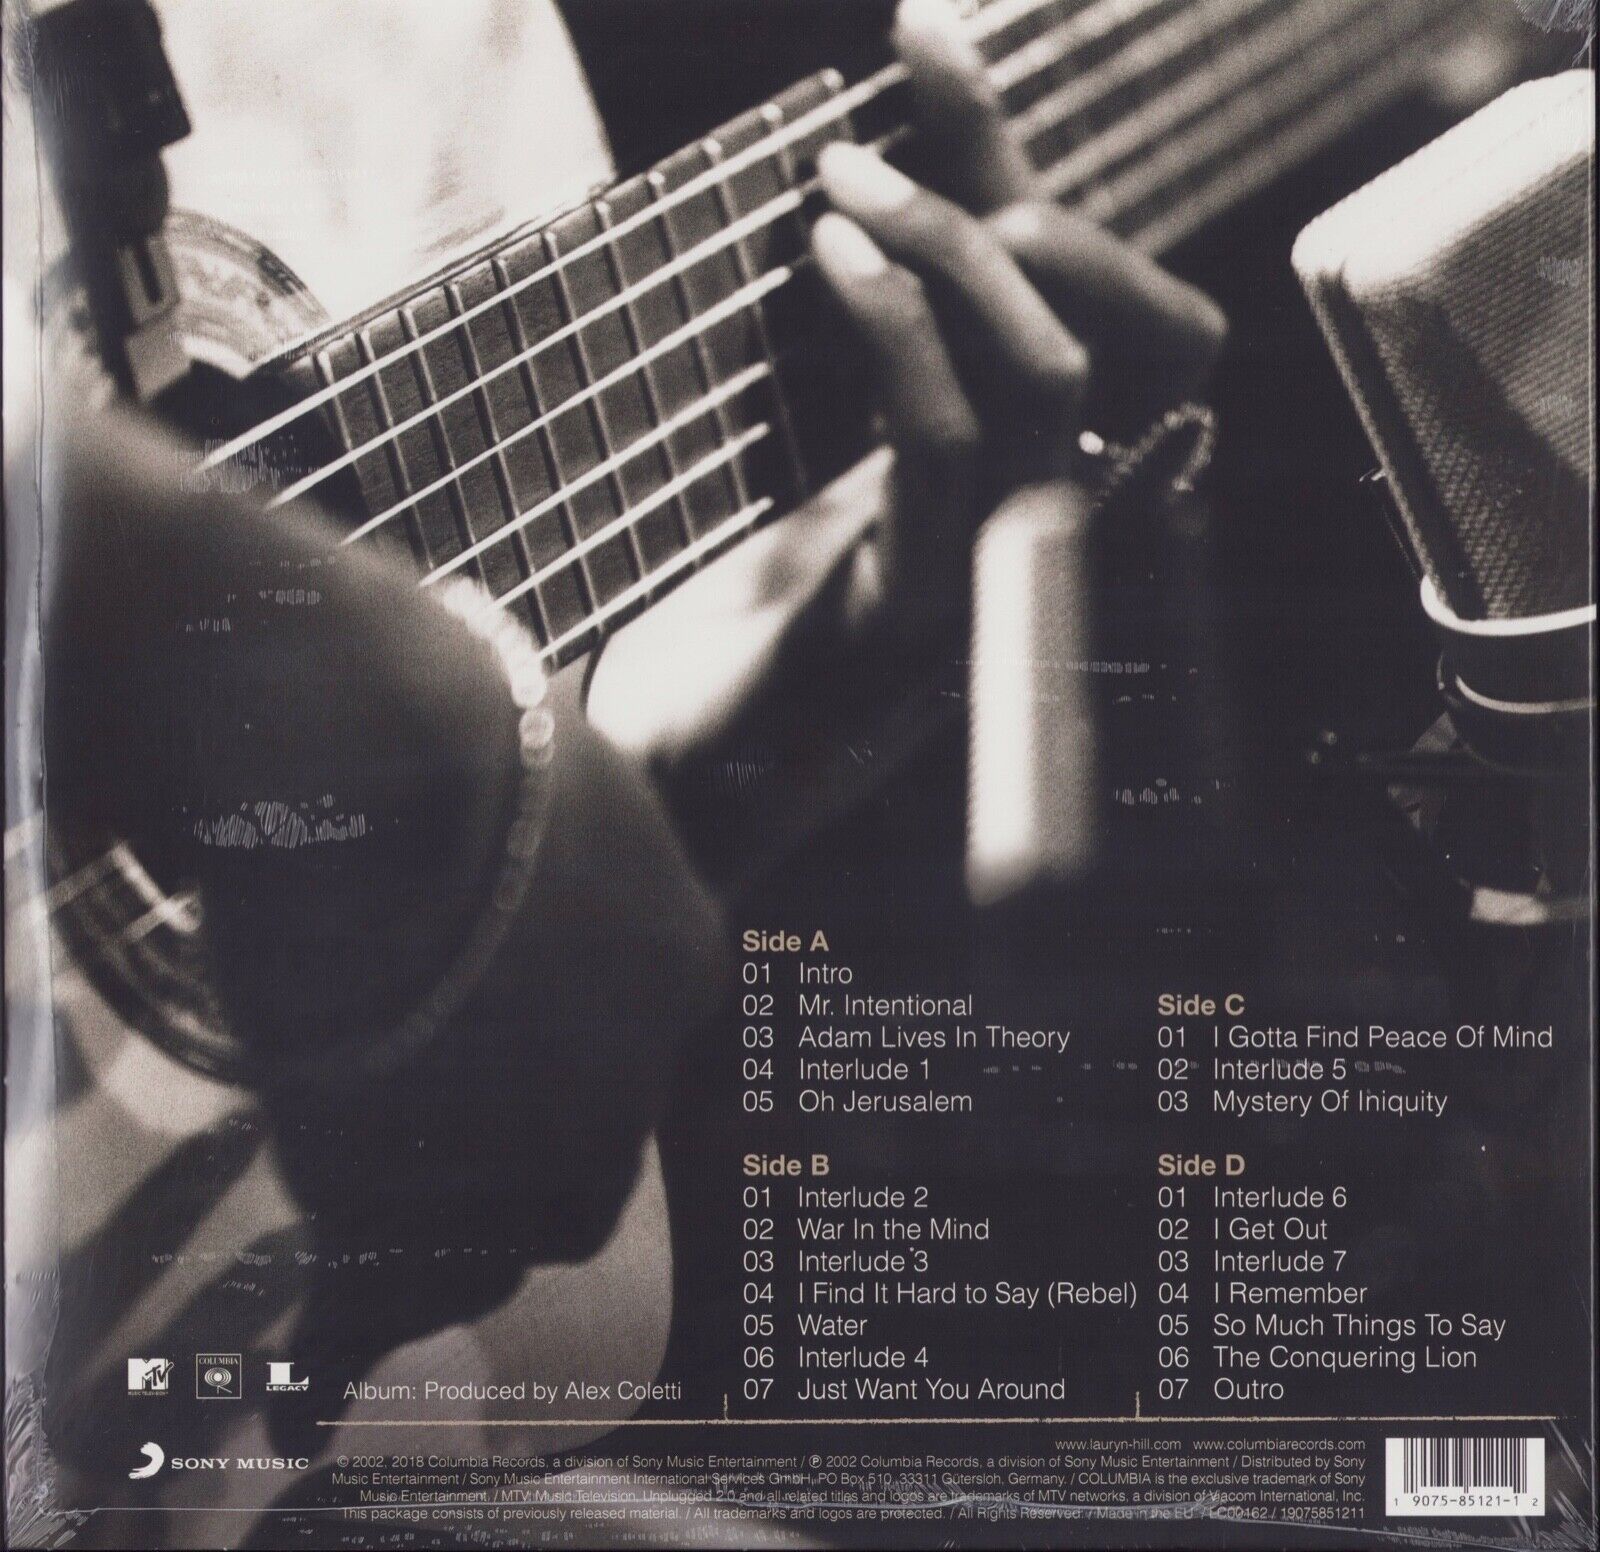 Lauryn Hill ‎- MTV Unplugged No. 2.0 Vinyl 2LP